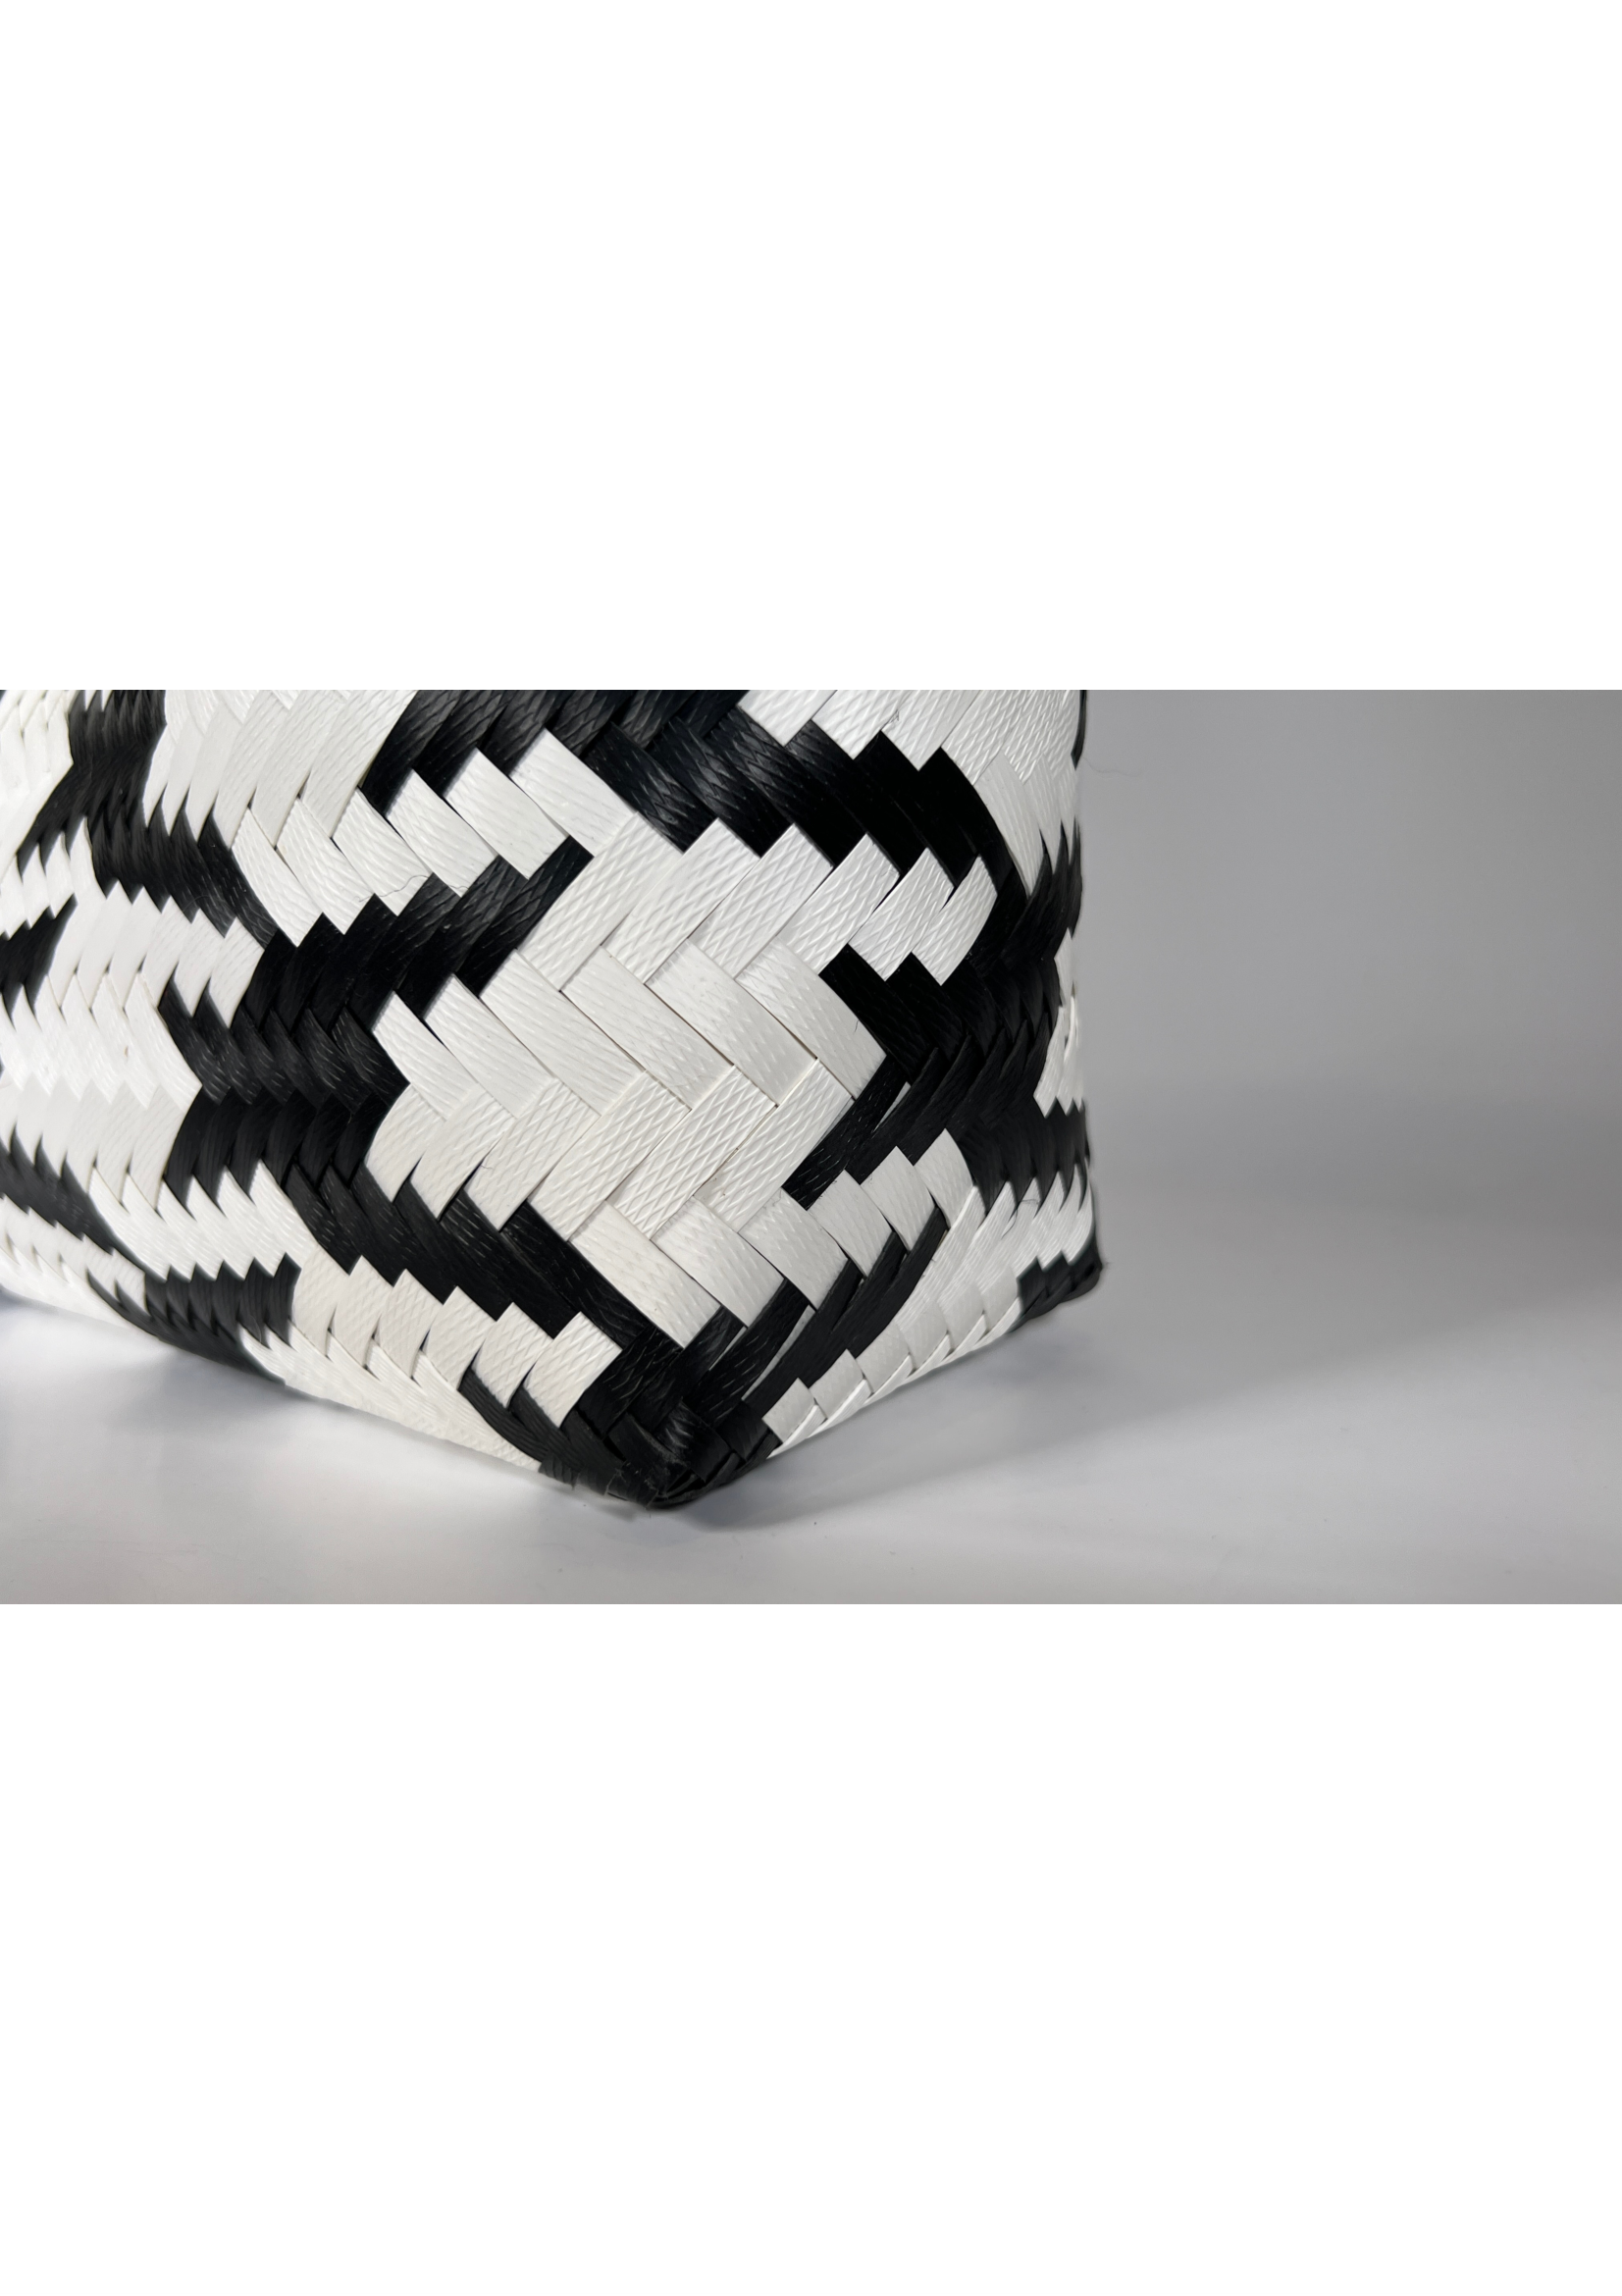 Crane Black & White Patterned Bag